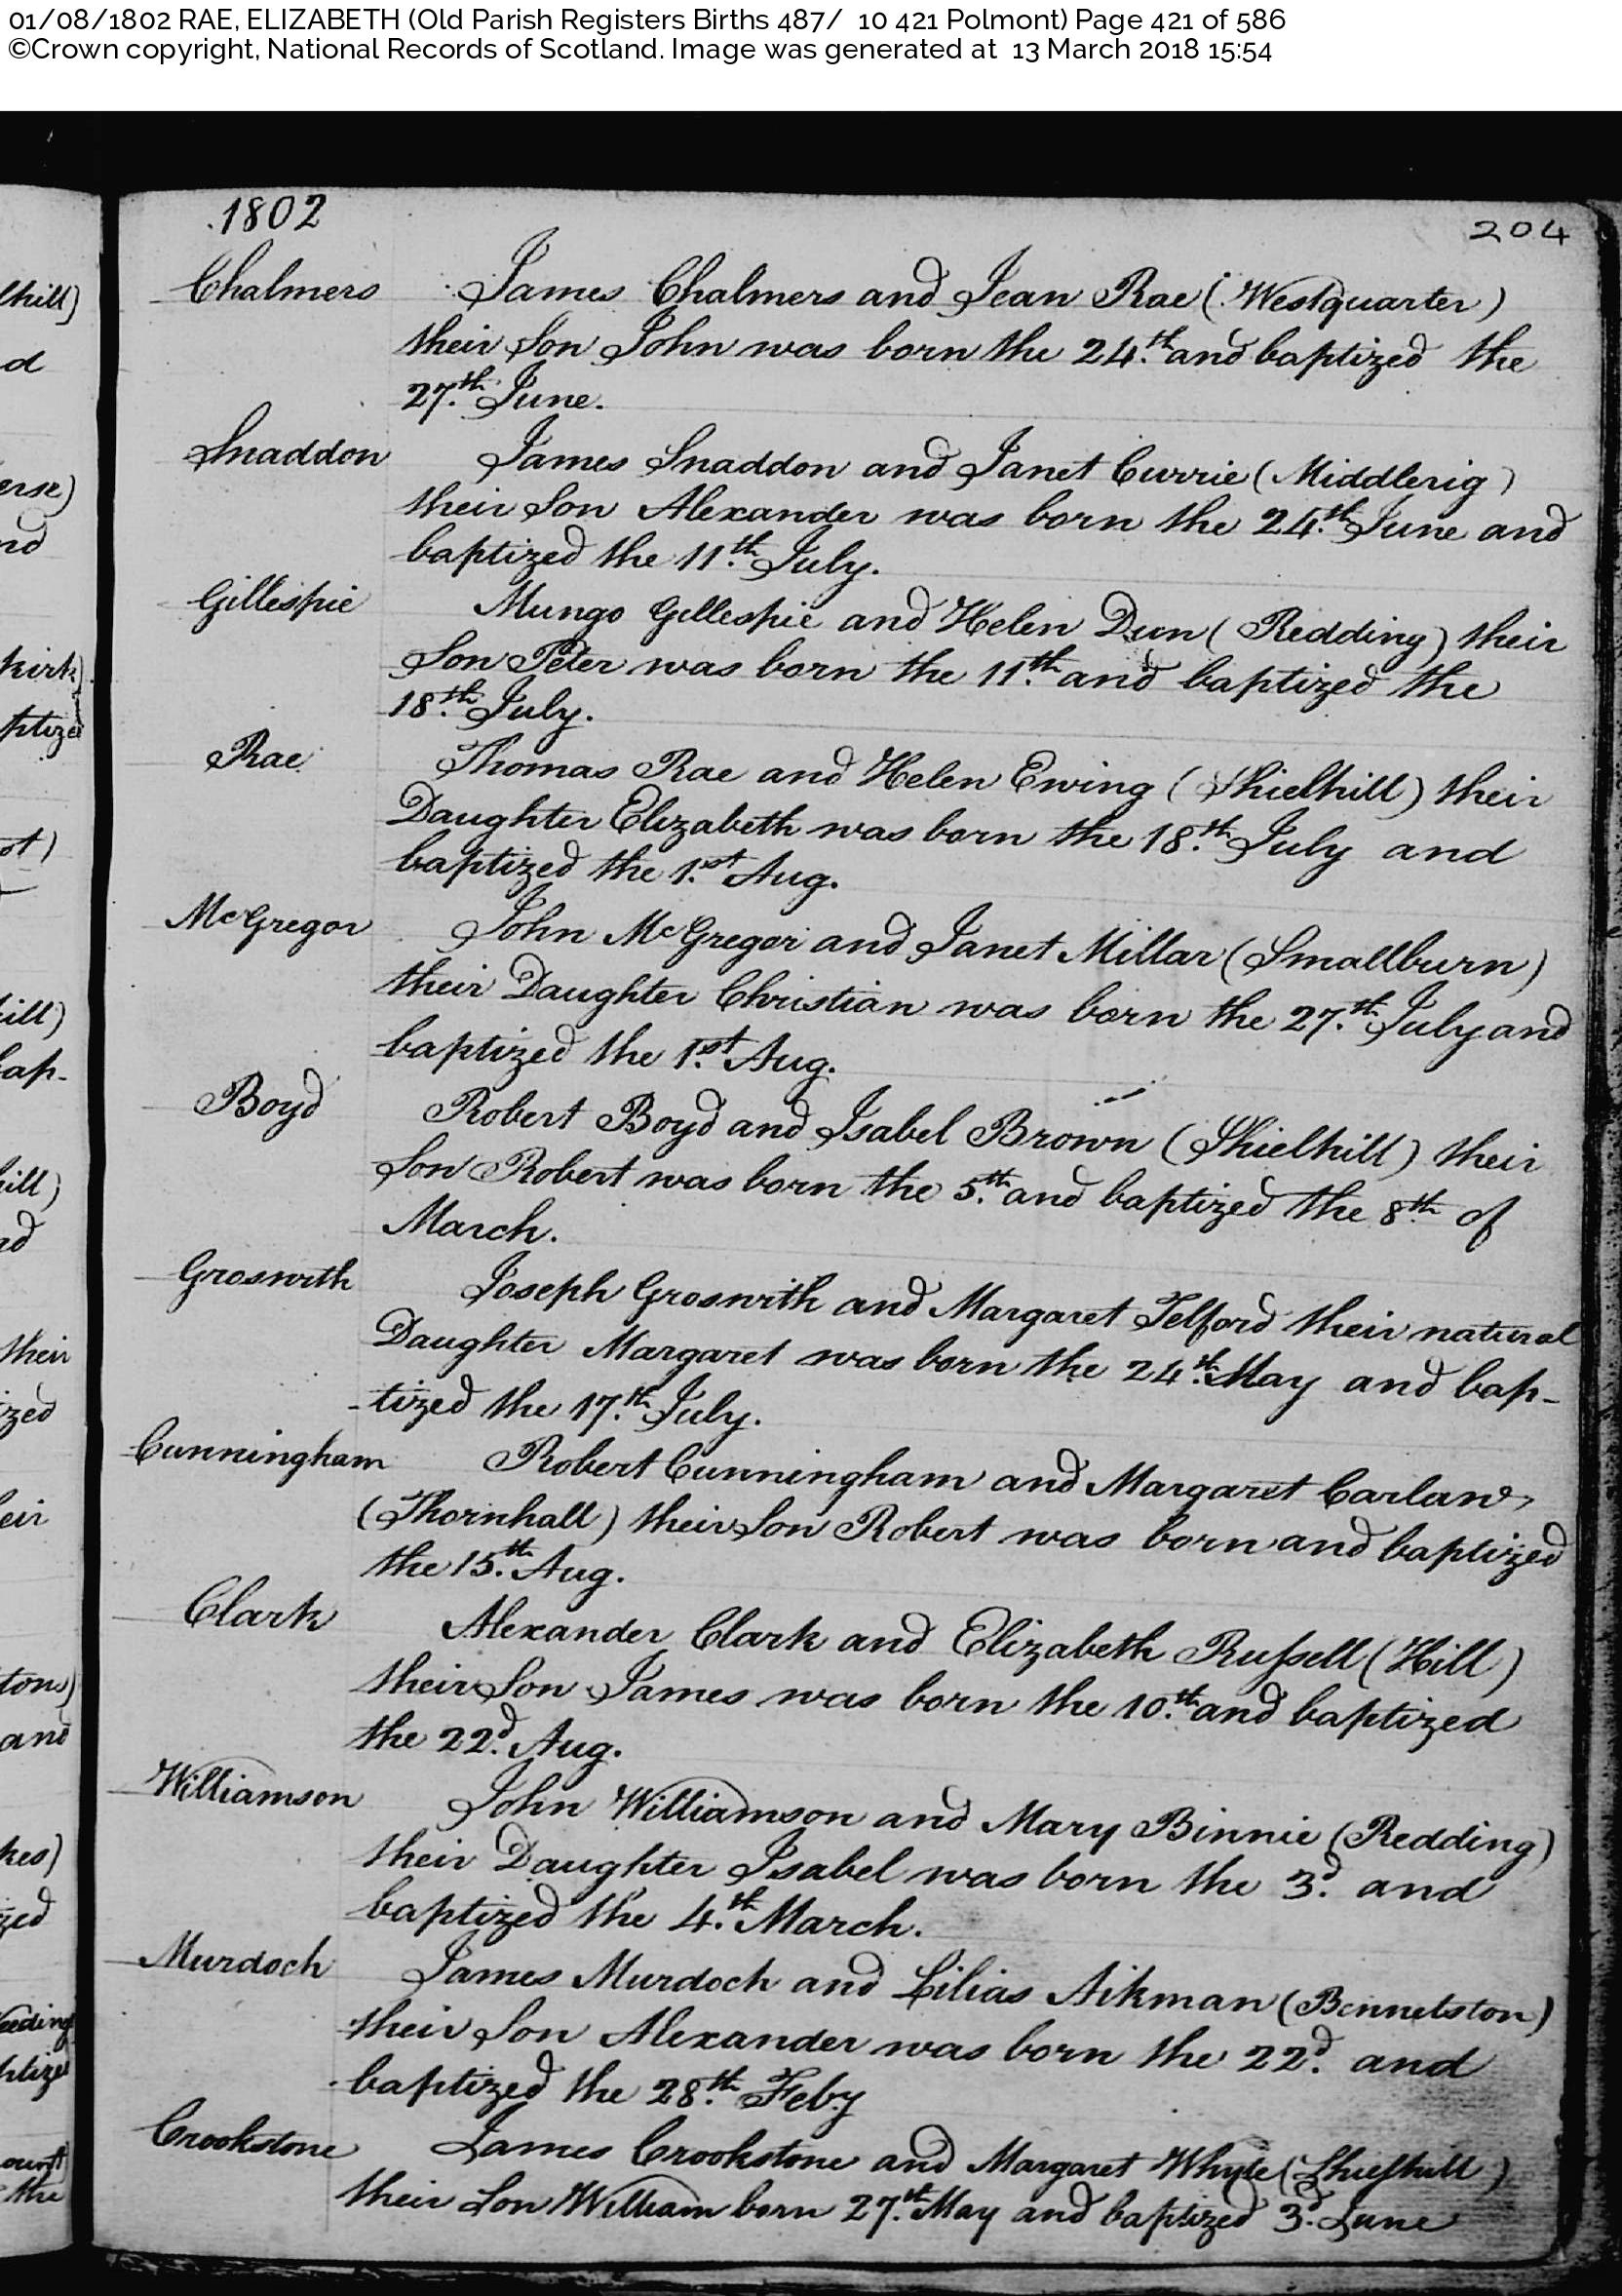 ElizabethRae_B1802 Shieldhill Polmont, July 18, 1802